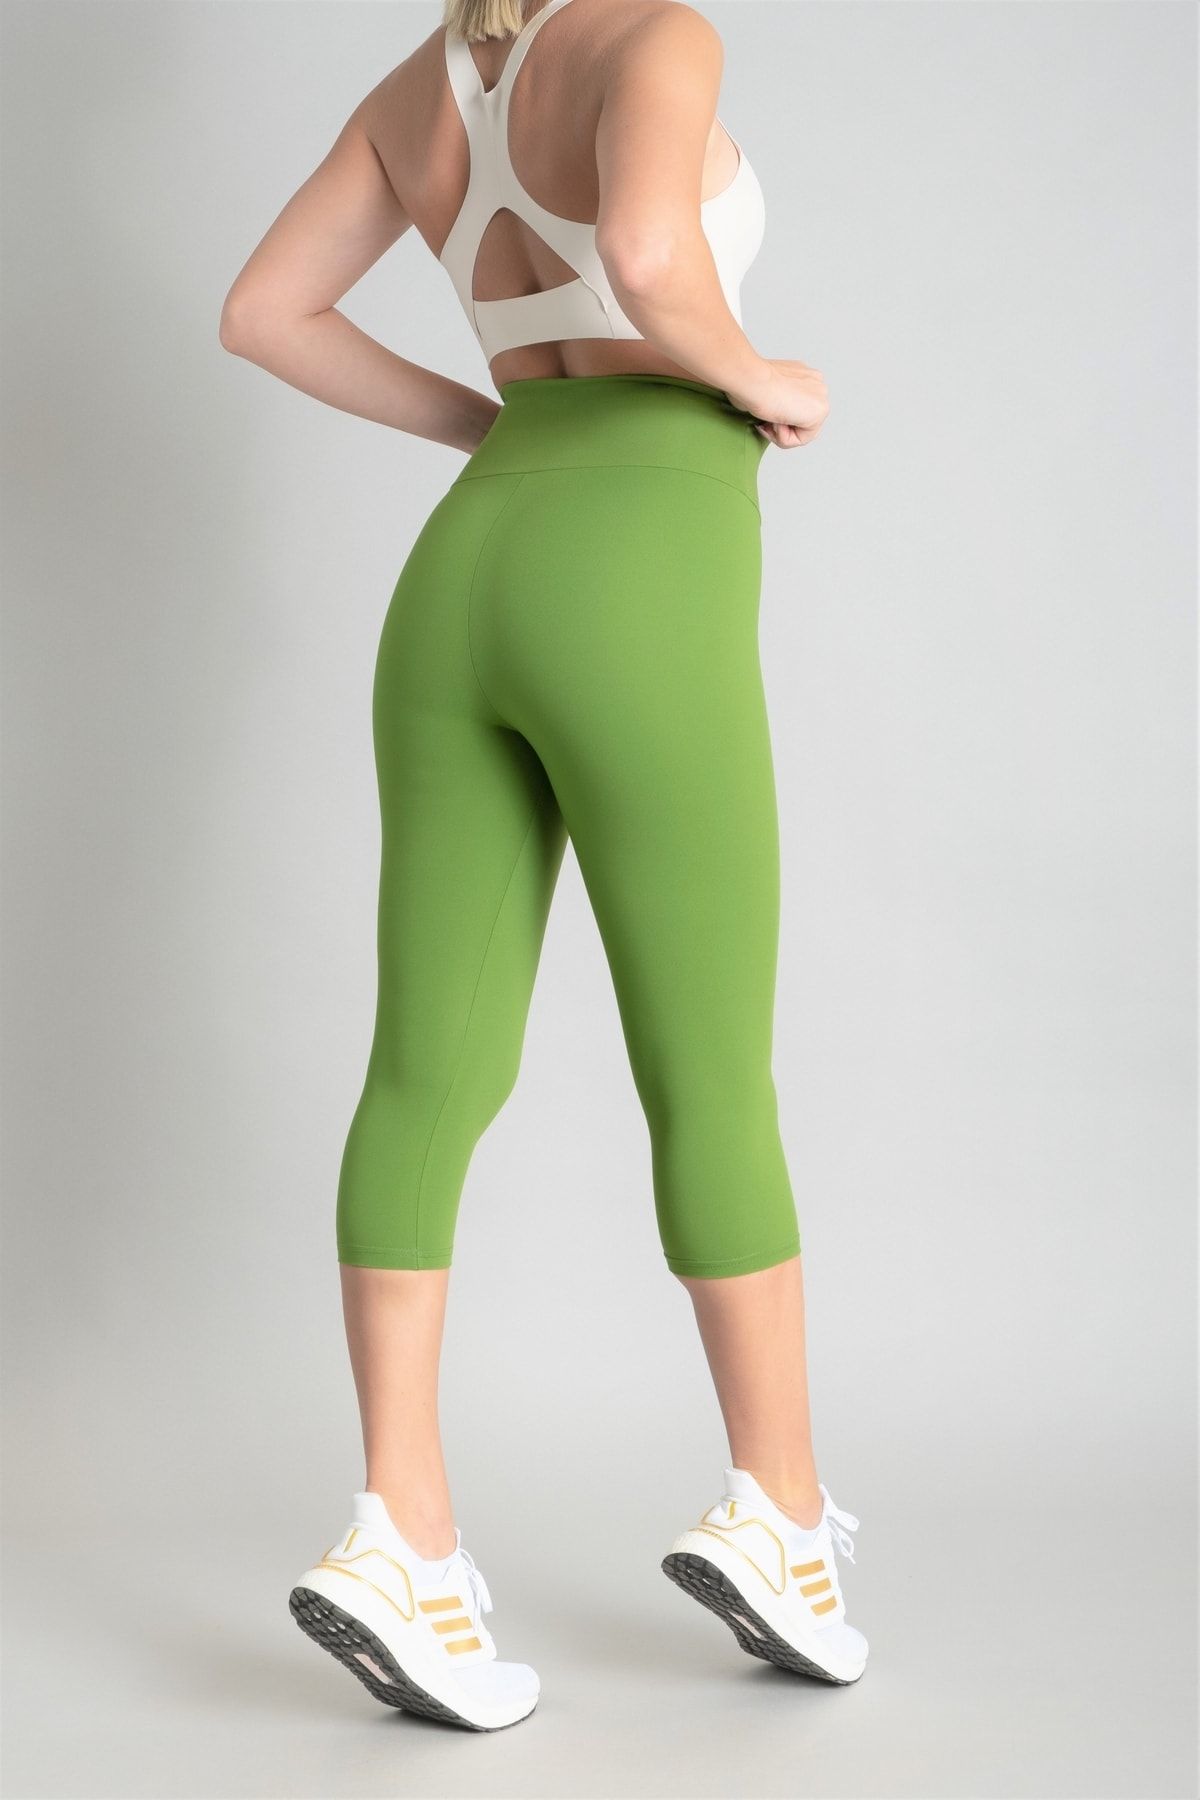 Vienfit Women's High Waist Push Up Tights Yoga Leggings  Green Size  7/8 - Trendyol